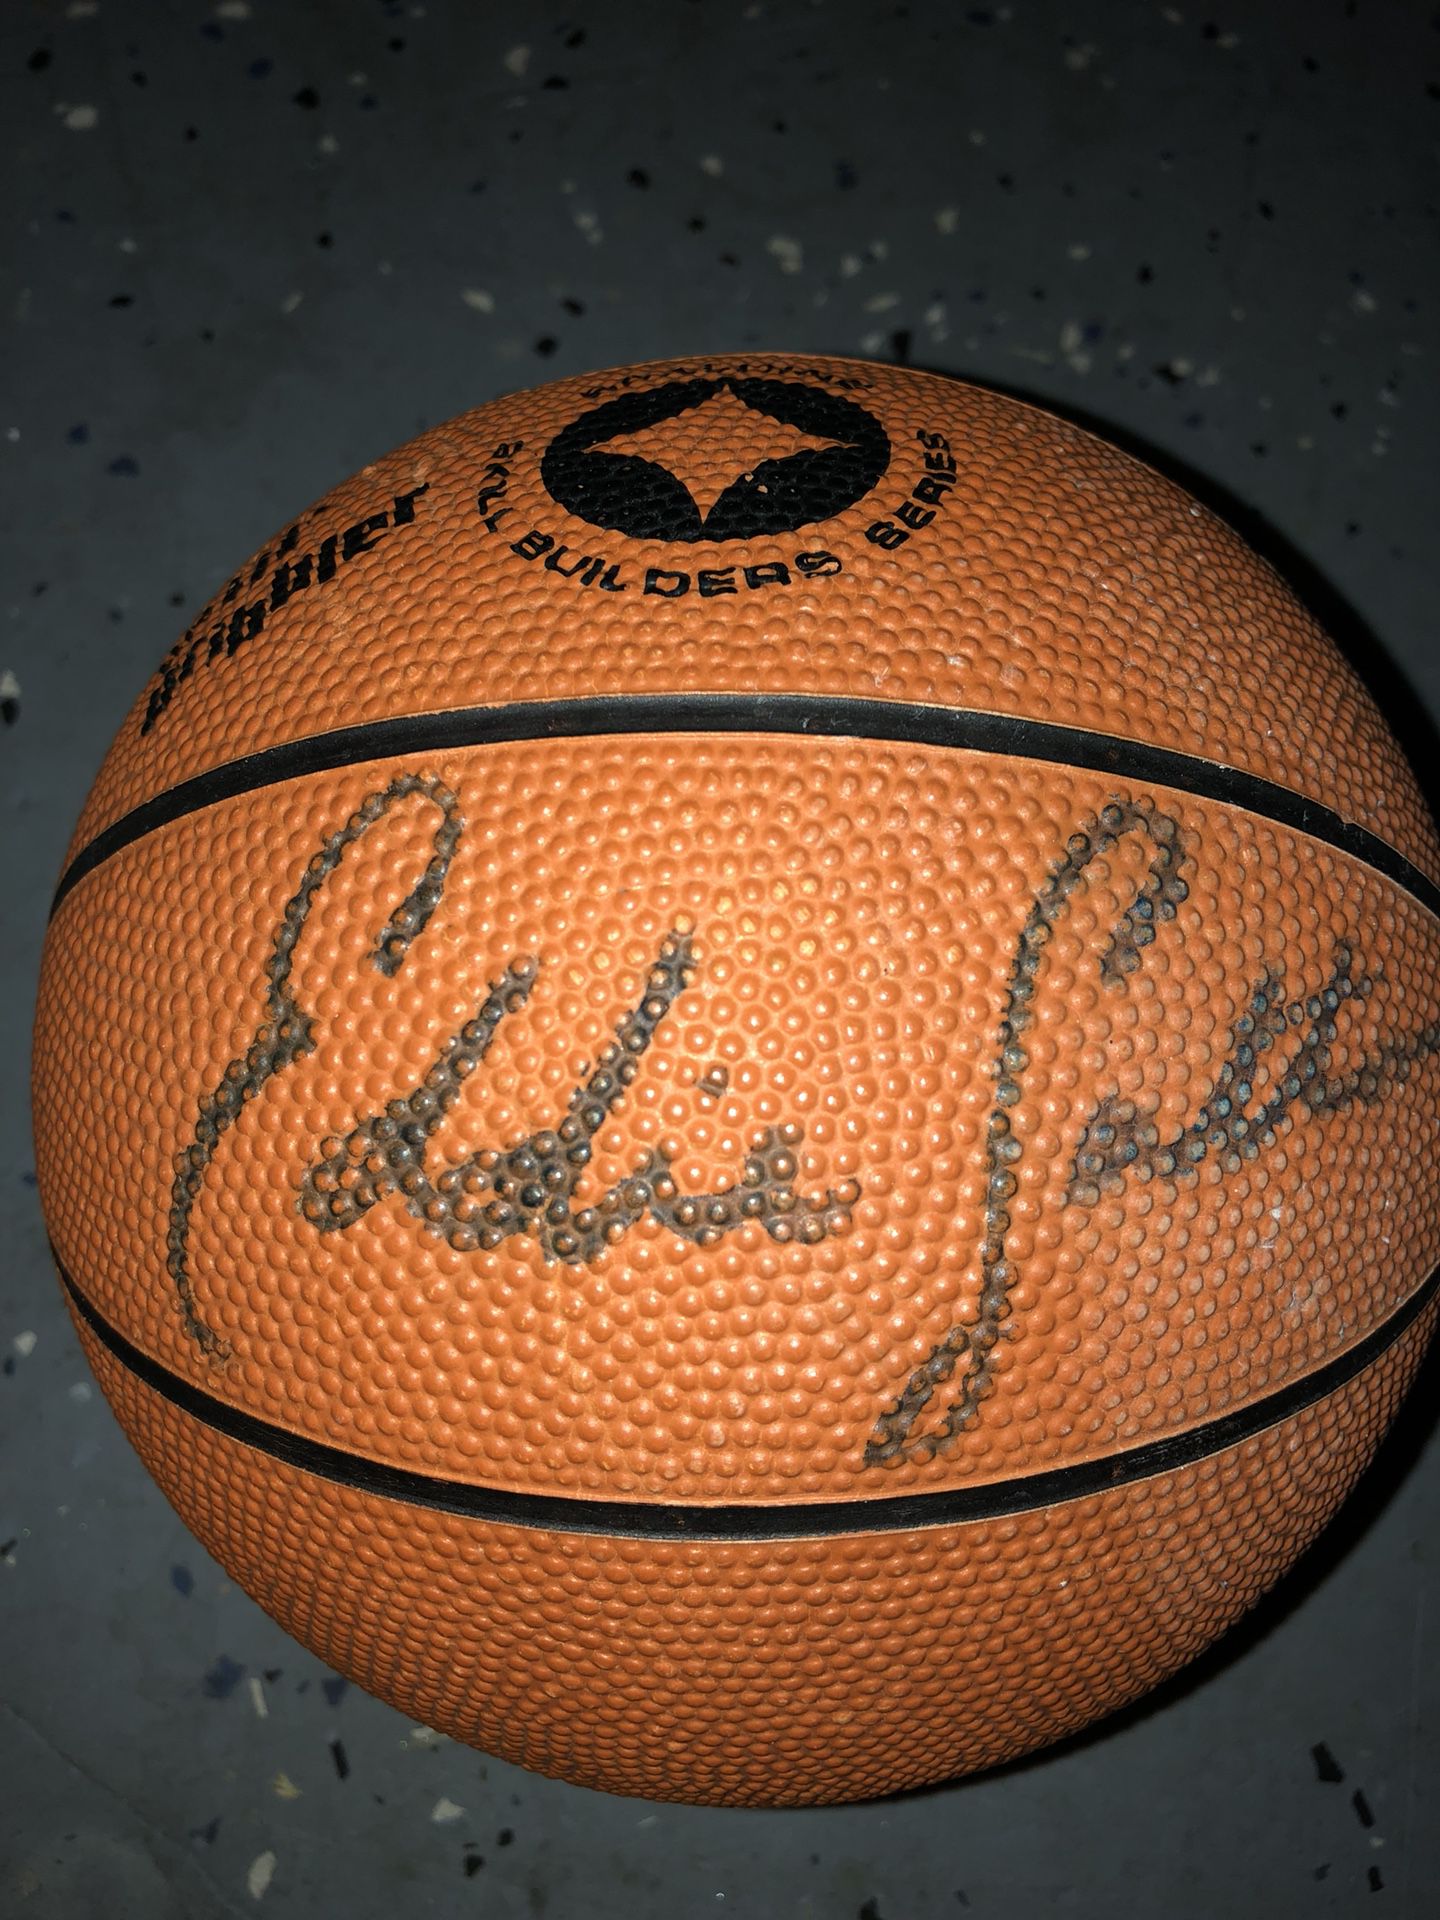 Eddie Sutton Autographed Mini Basketball